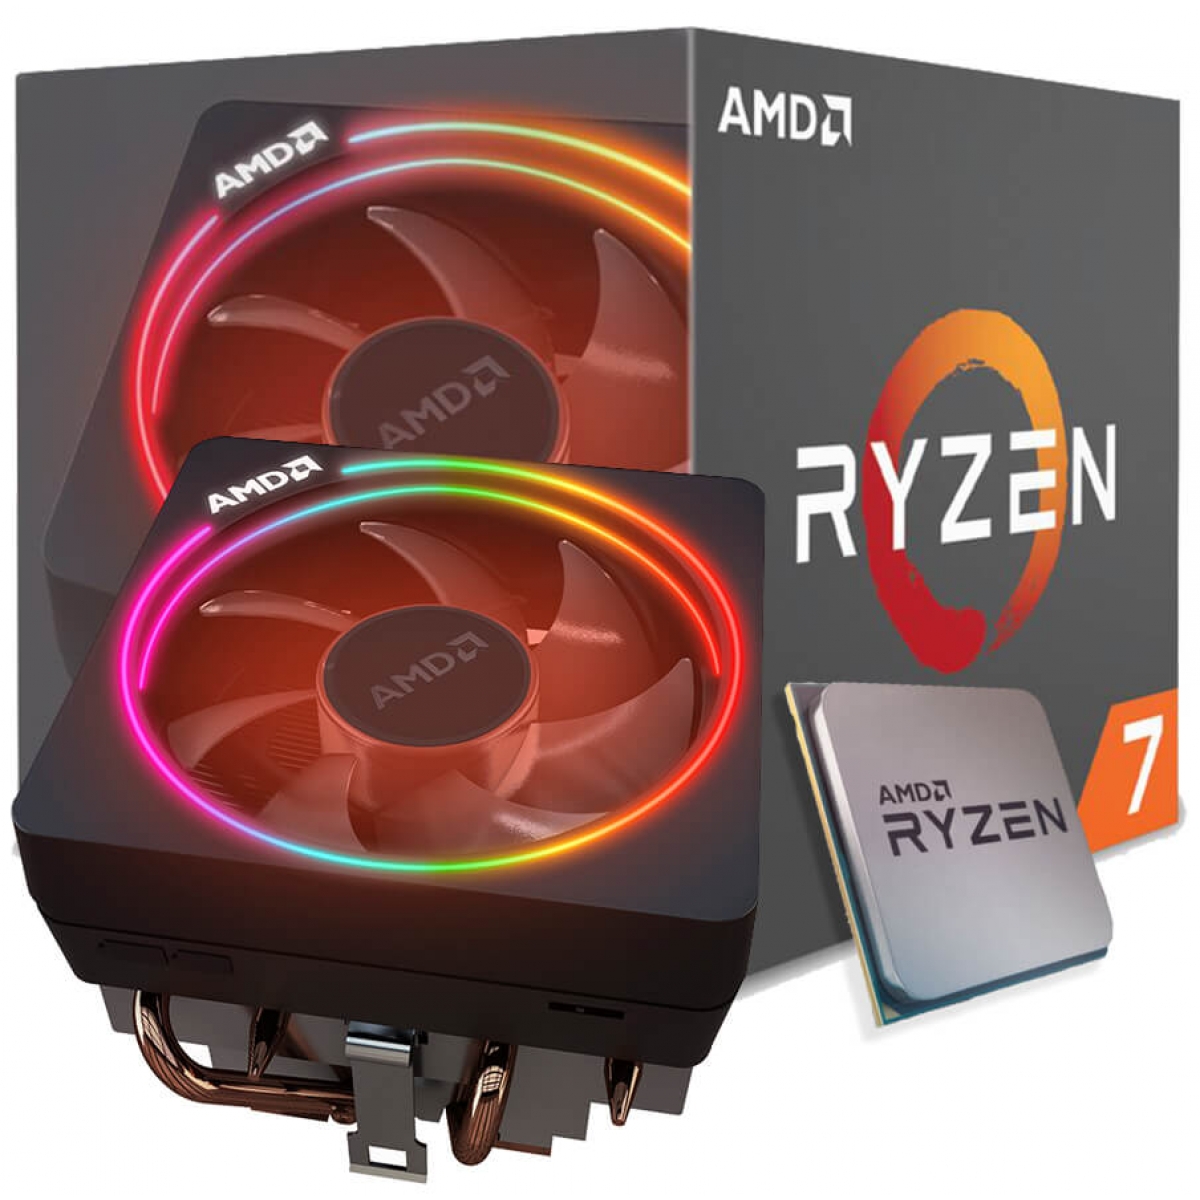 Processador AMD Ryzen 7 2700X 3.7GHz (4.35GHz Turbo), 8-Cores 16-Threads, Cooler Wraith Prism RGB, AM4, YD270XBGAFBOX, S/ Video